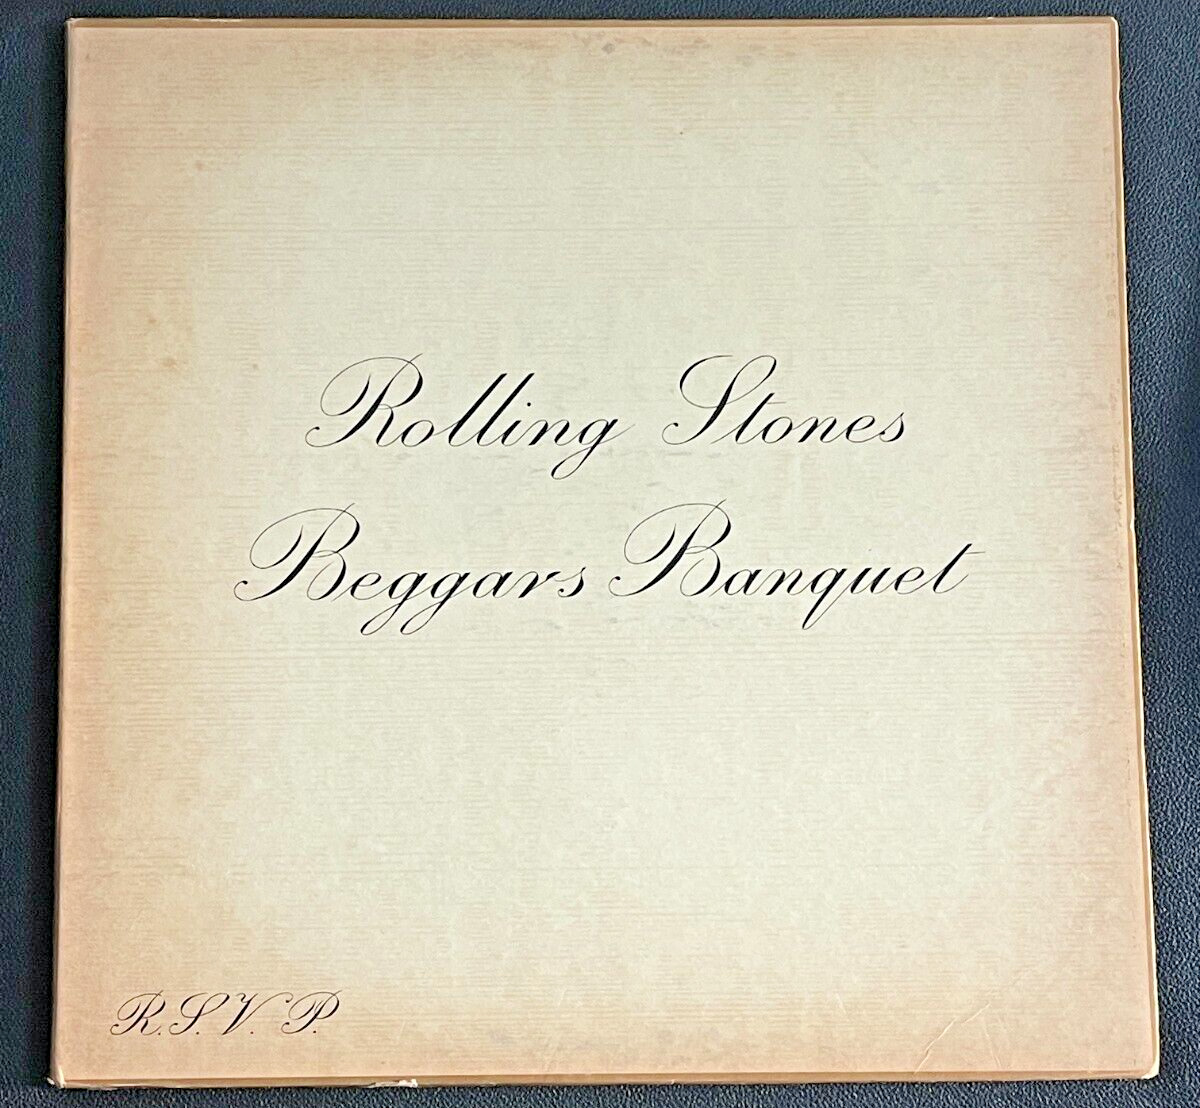 THE ROLLING STONES - Beggars Banquet PS 539 Original 1968 Vinyl LP Album